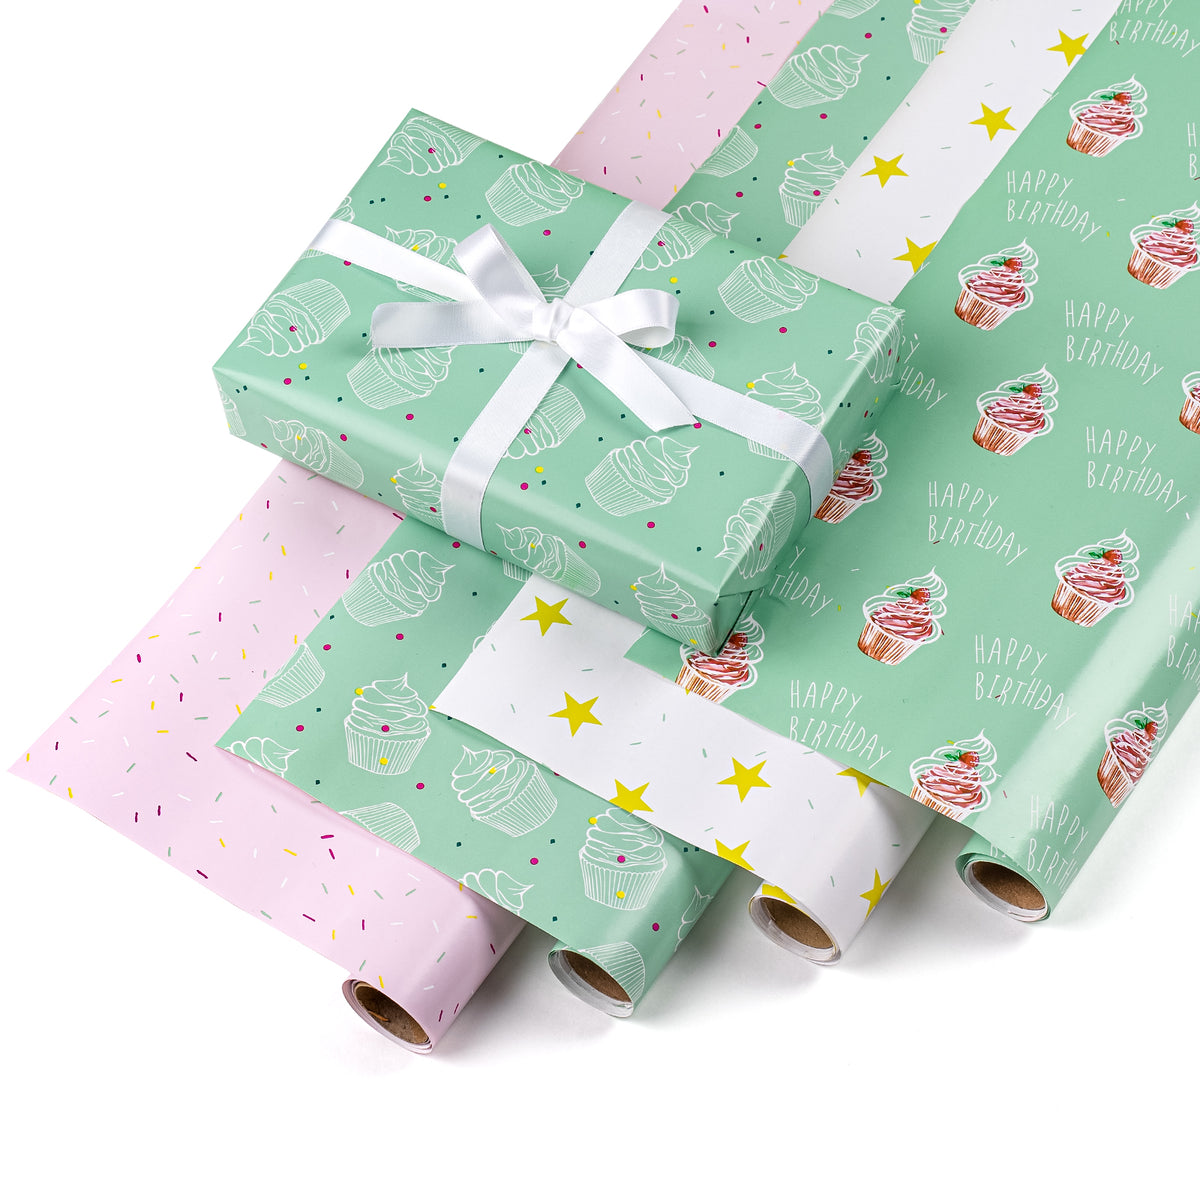 120 Sheets Decorative Birthday Tissue Paper Bulk for Baby Shower